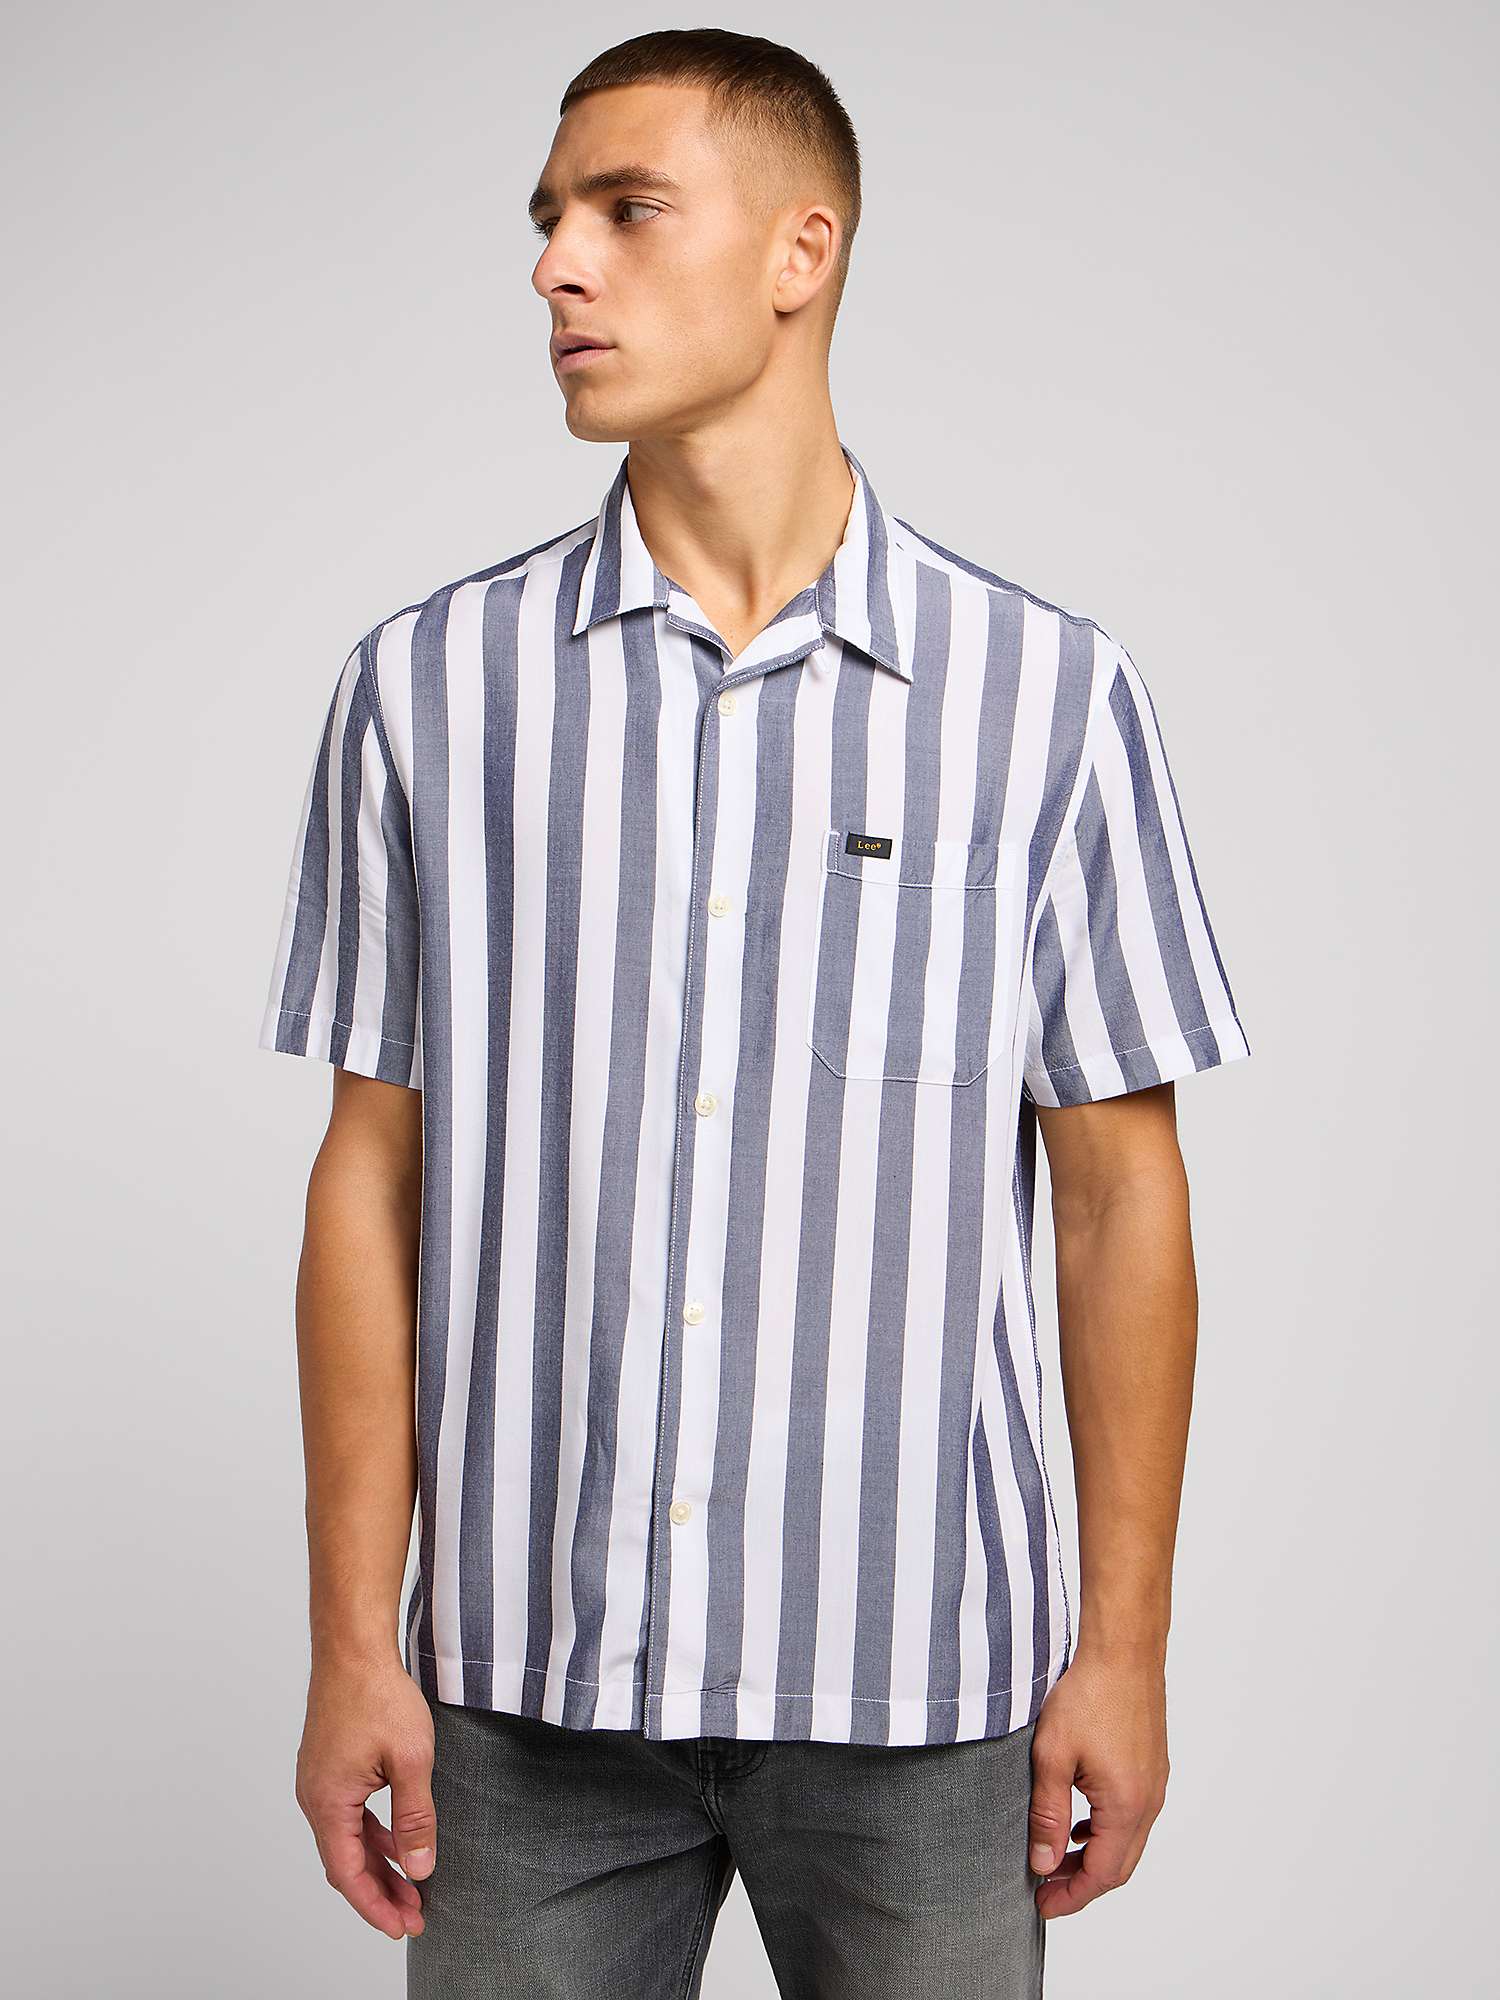 Buy Lee Resort Stripe Short Sleeve Shirt, Blue/Multi Online at johnlewis.com